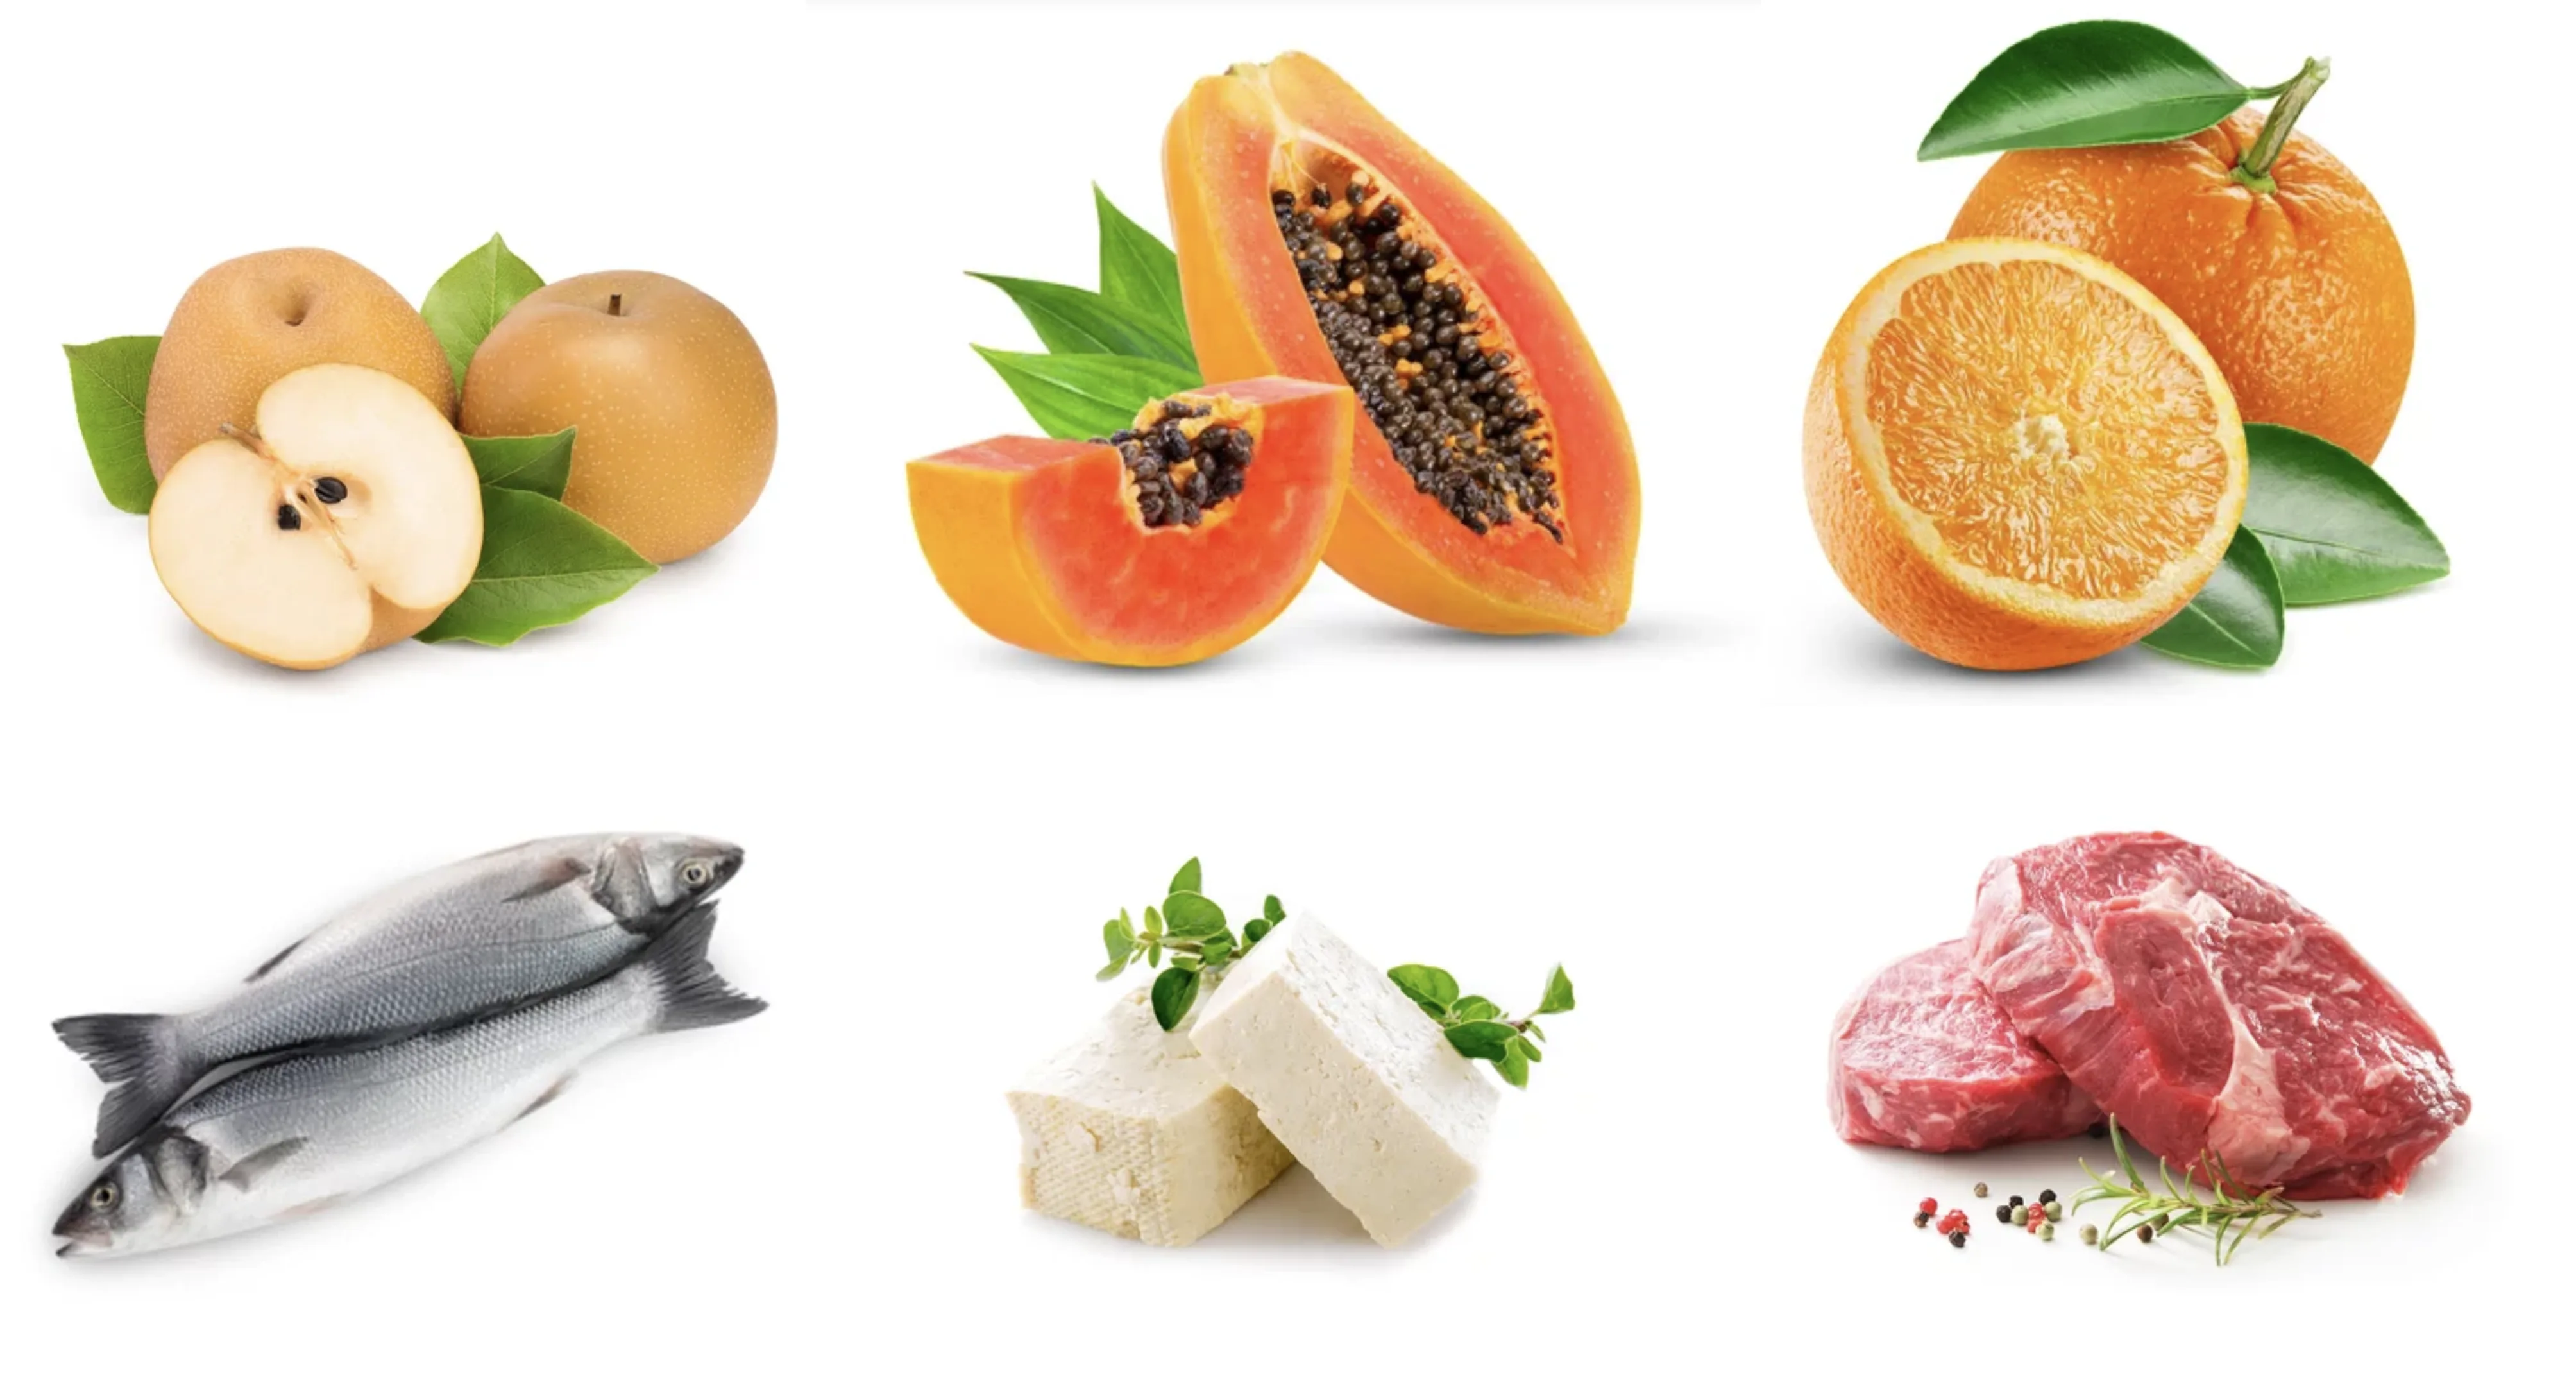 Fruit testing on Asian Pear, Papaya, Orange, Fish, Tofu and Meats